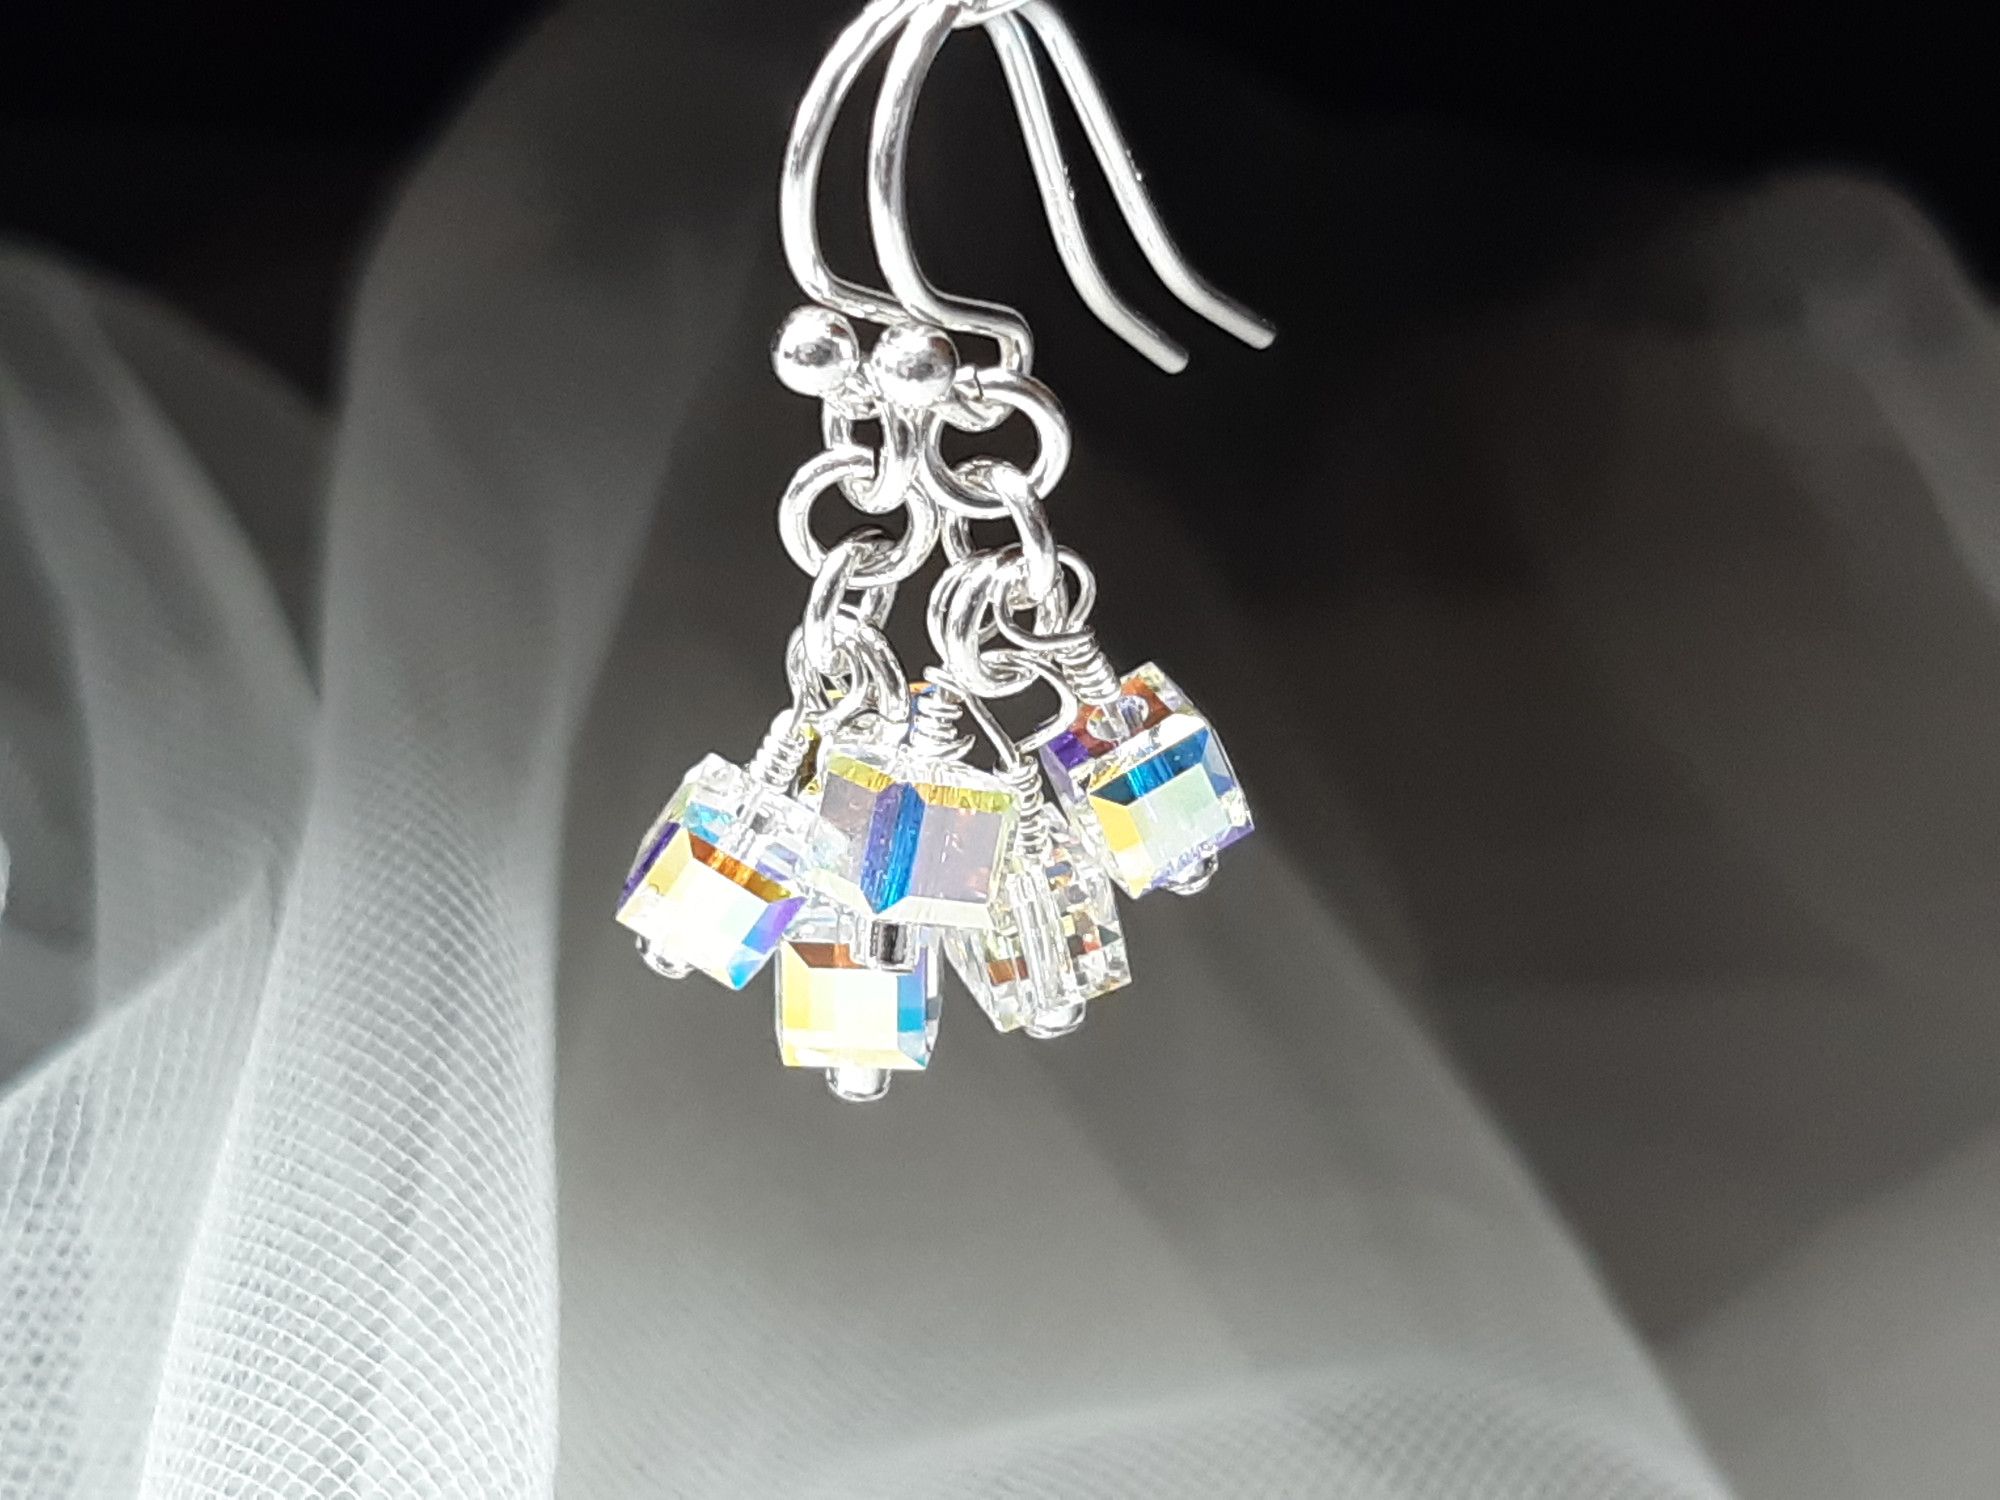 Occasion-bridal-swarovski crystal+sterling silver earrings-4.jpg